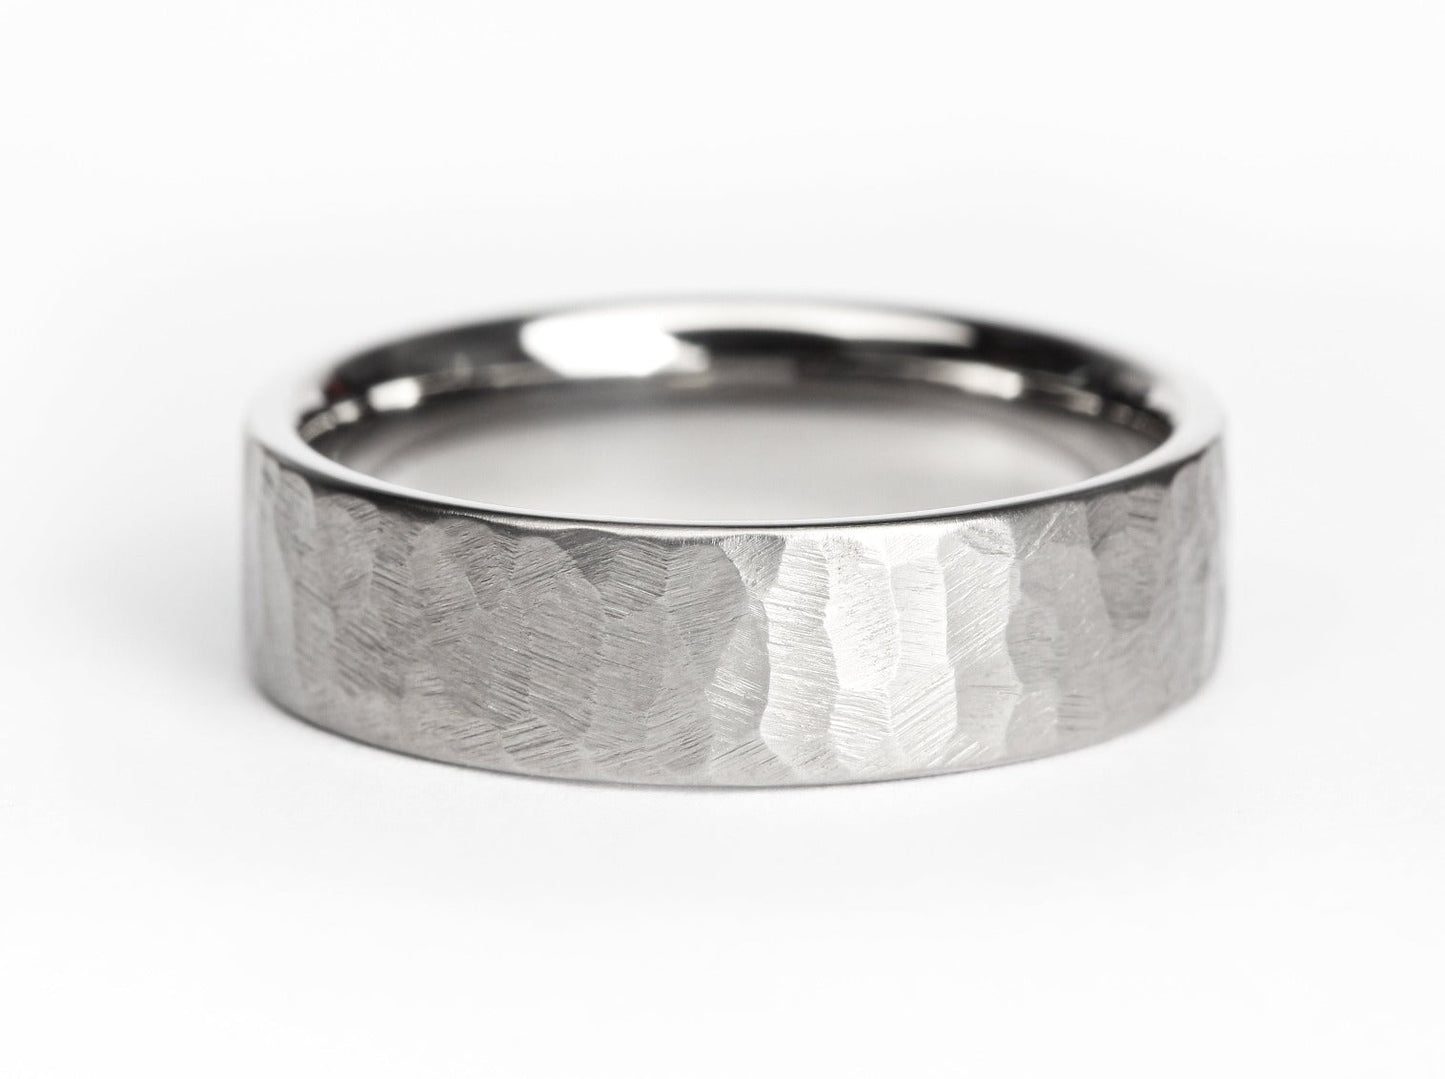 Custom "Cornell" Hammered Design Titanium Ring With Polished Interior